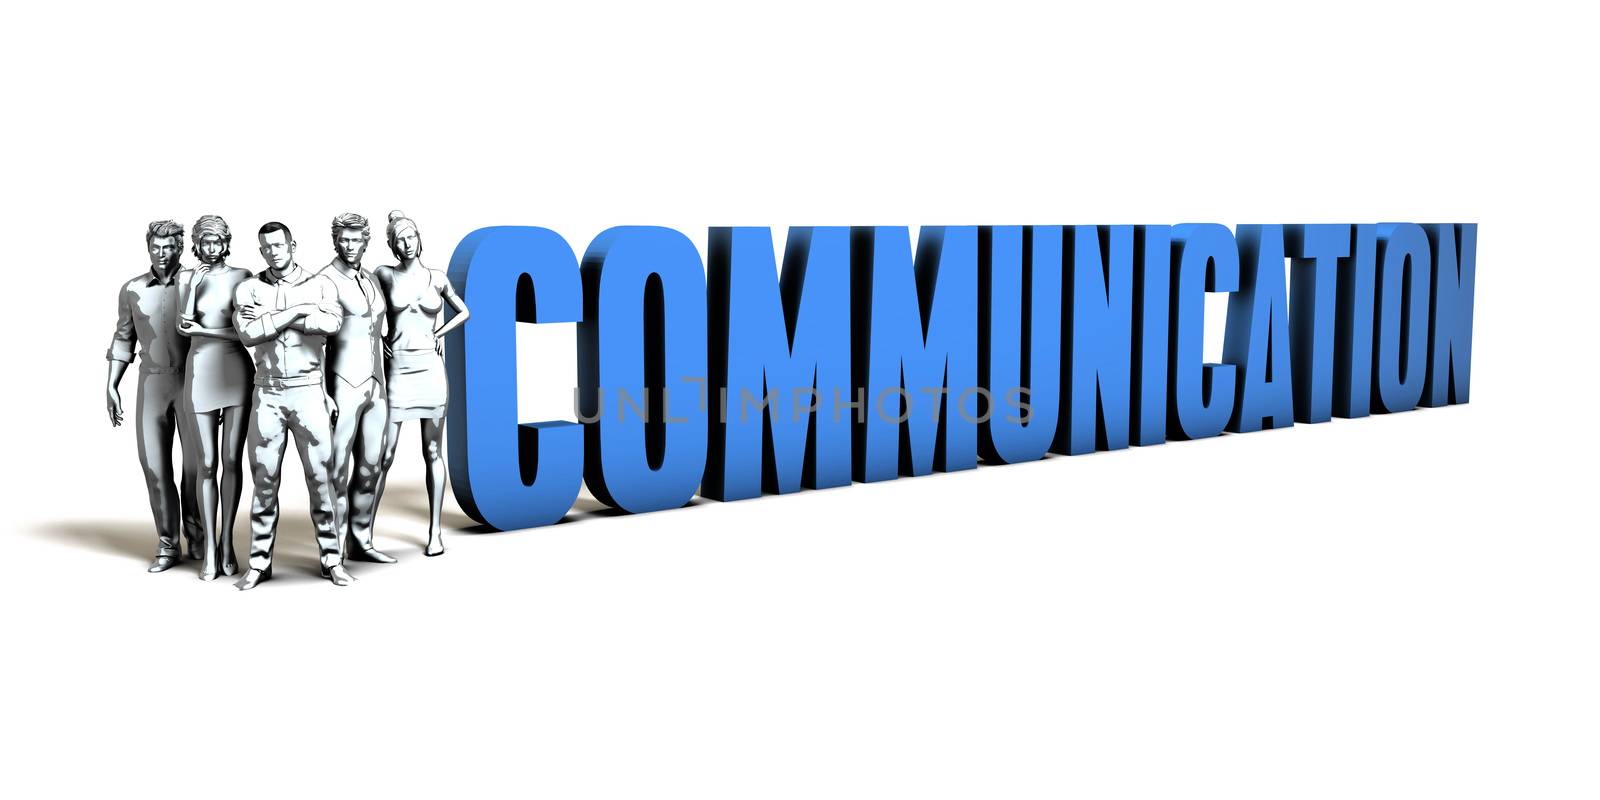 Communication Business Concept by kentoh